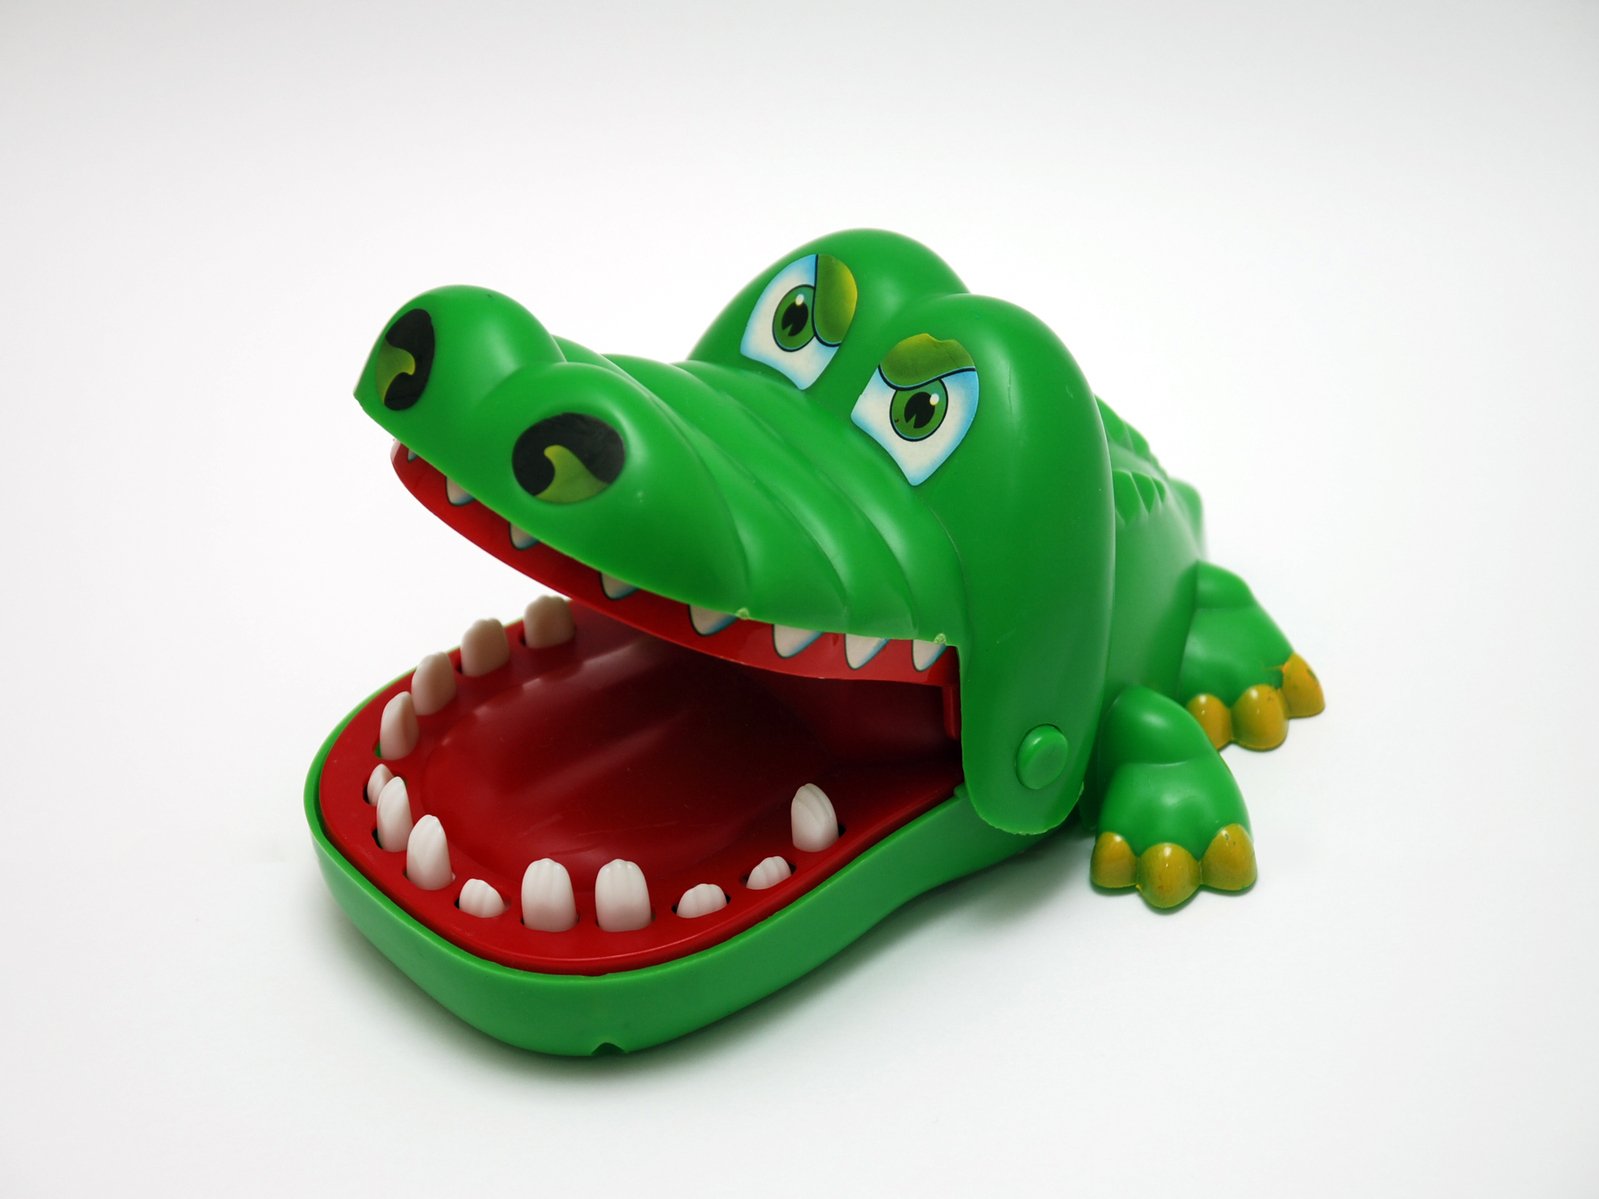 a toy crocodile's teeth and green eyes